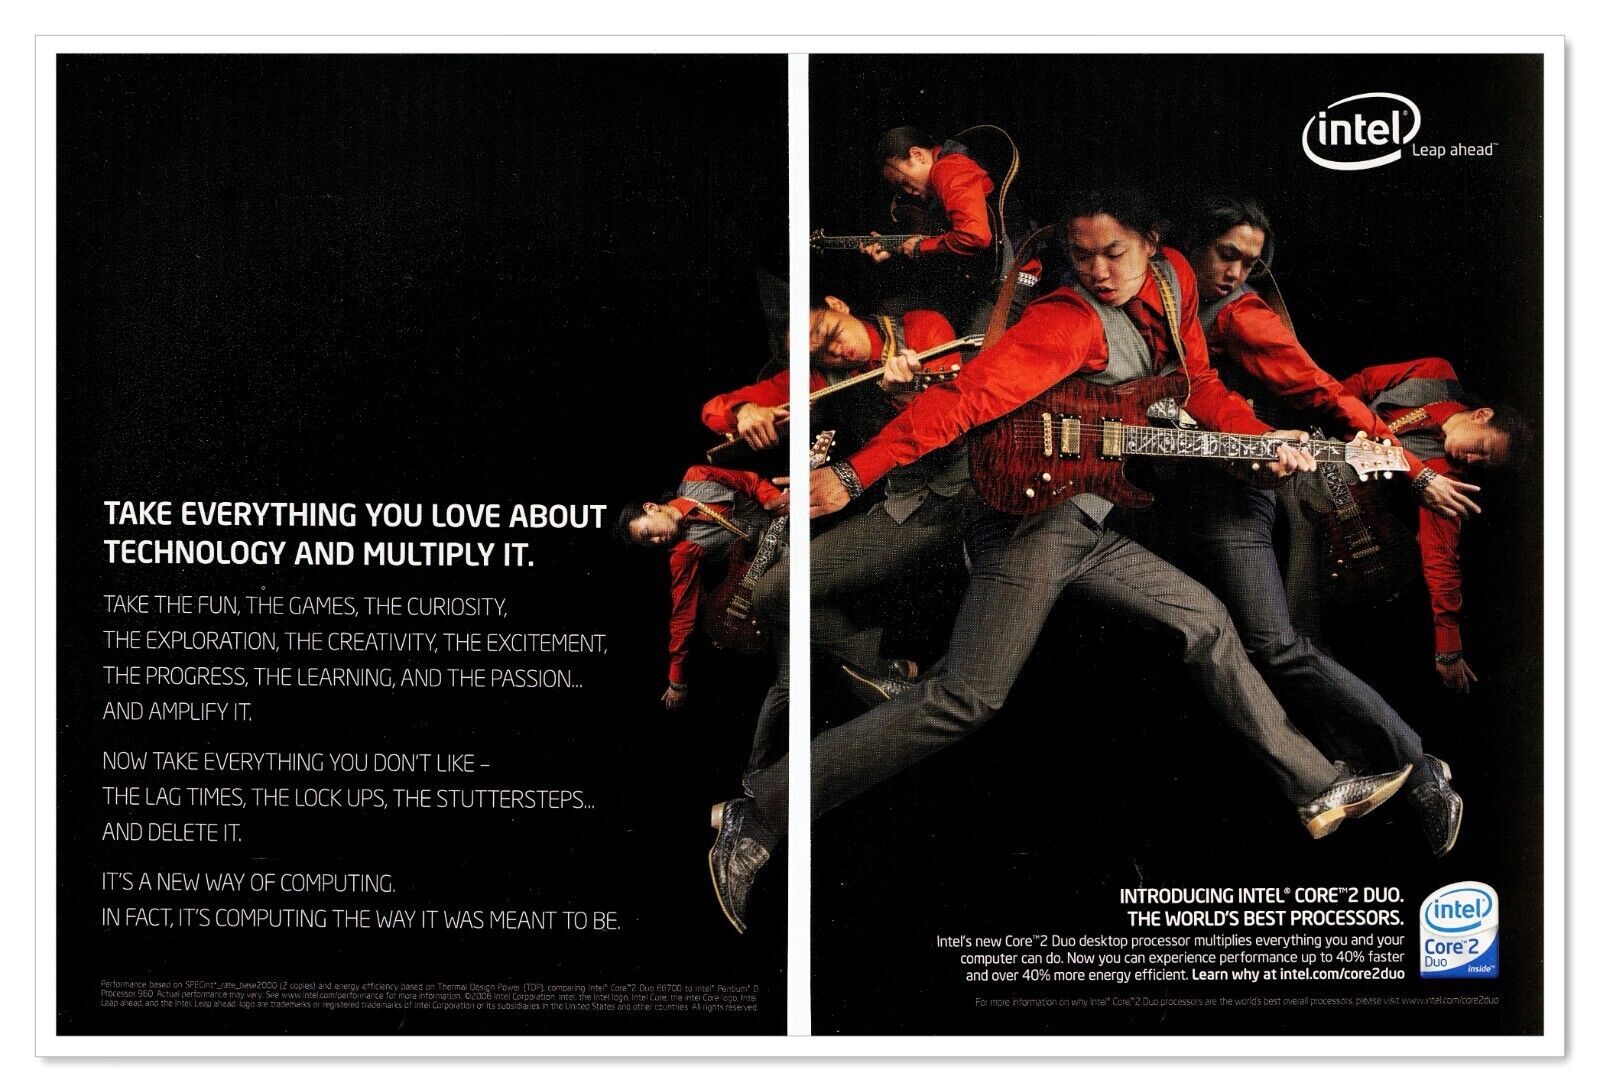 Intel Core 2 Duo Processor Multiply It Guitar 2006 2-Page Print Magazine Ad